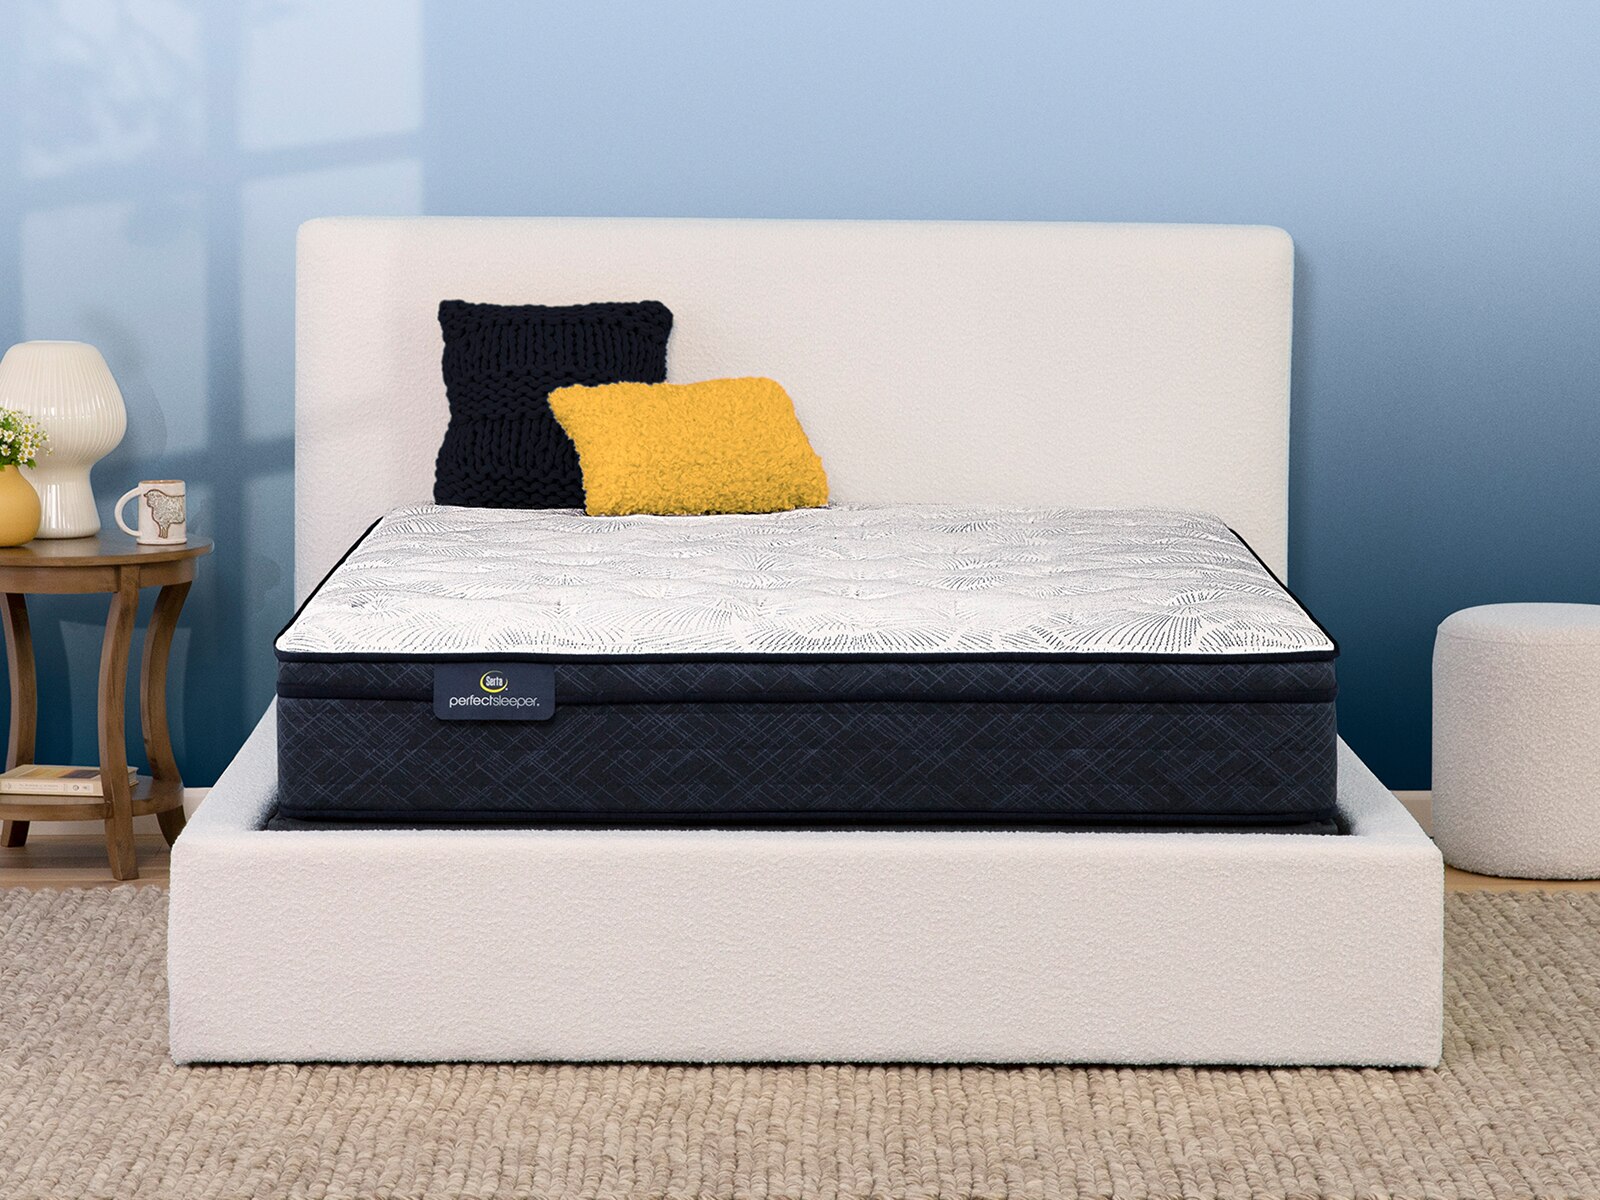 serta perfect sleeper ashbrook 12 eurotop plush mattress